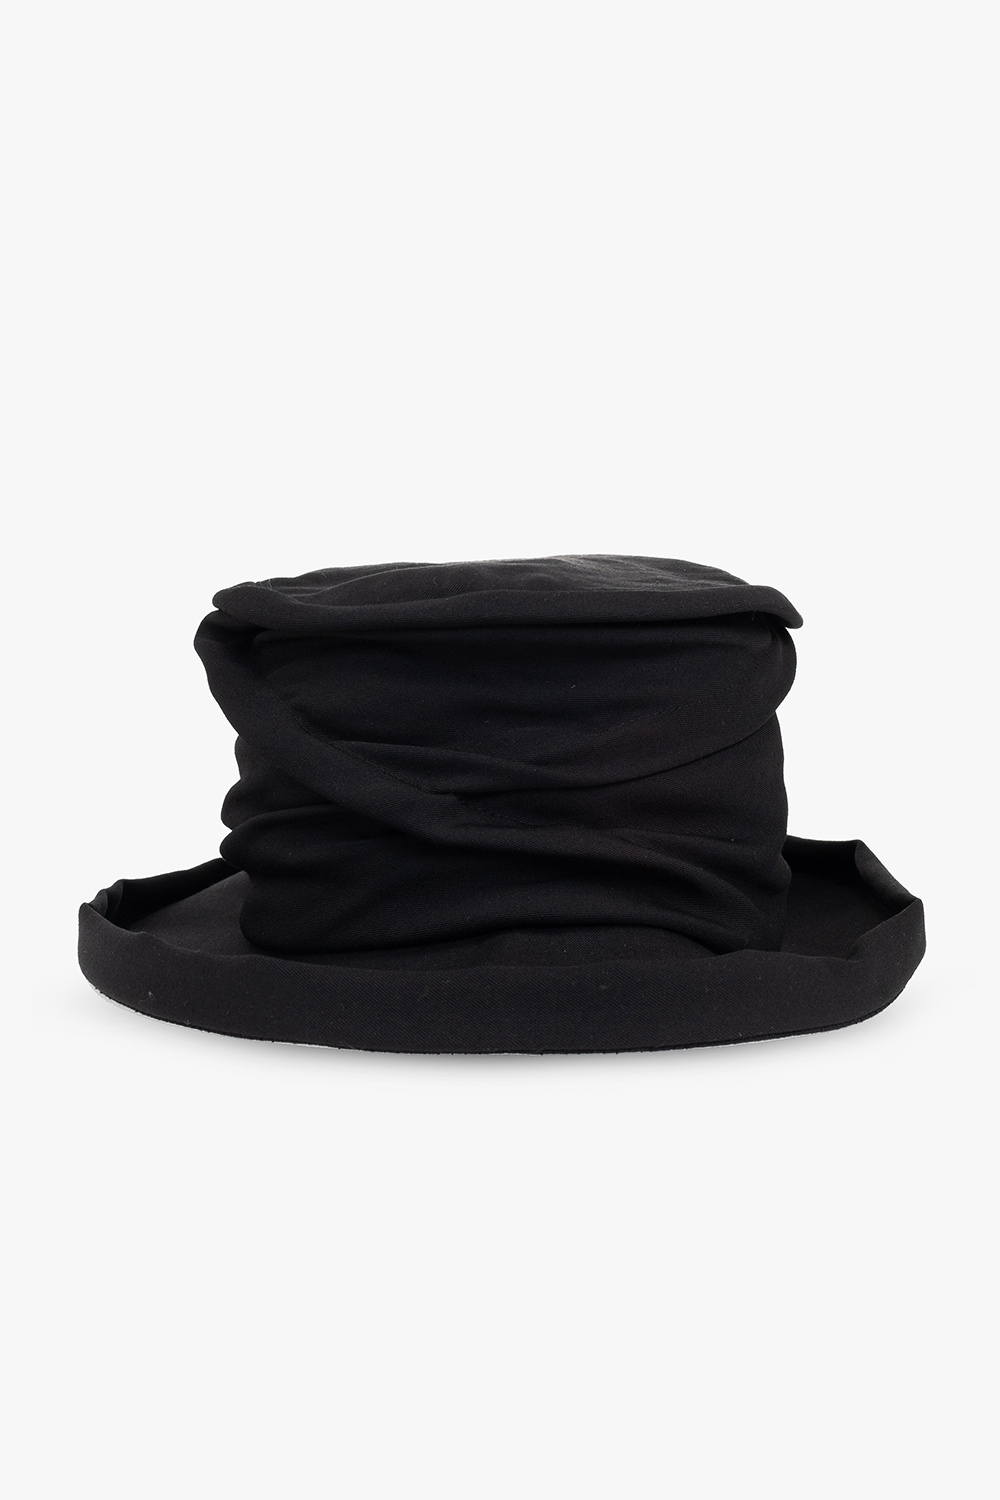 GenesinlifeShops Canada - Beanie Cap 804944 GS531 - Black Wool hat 